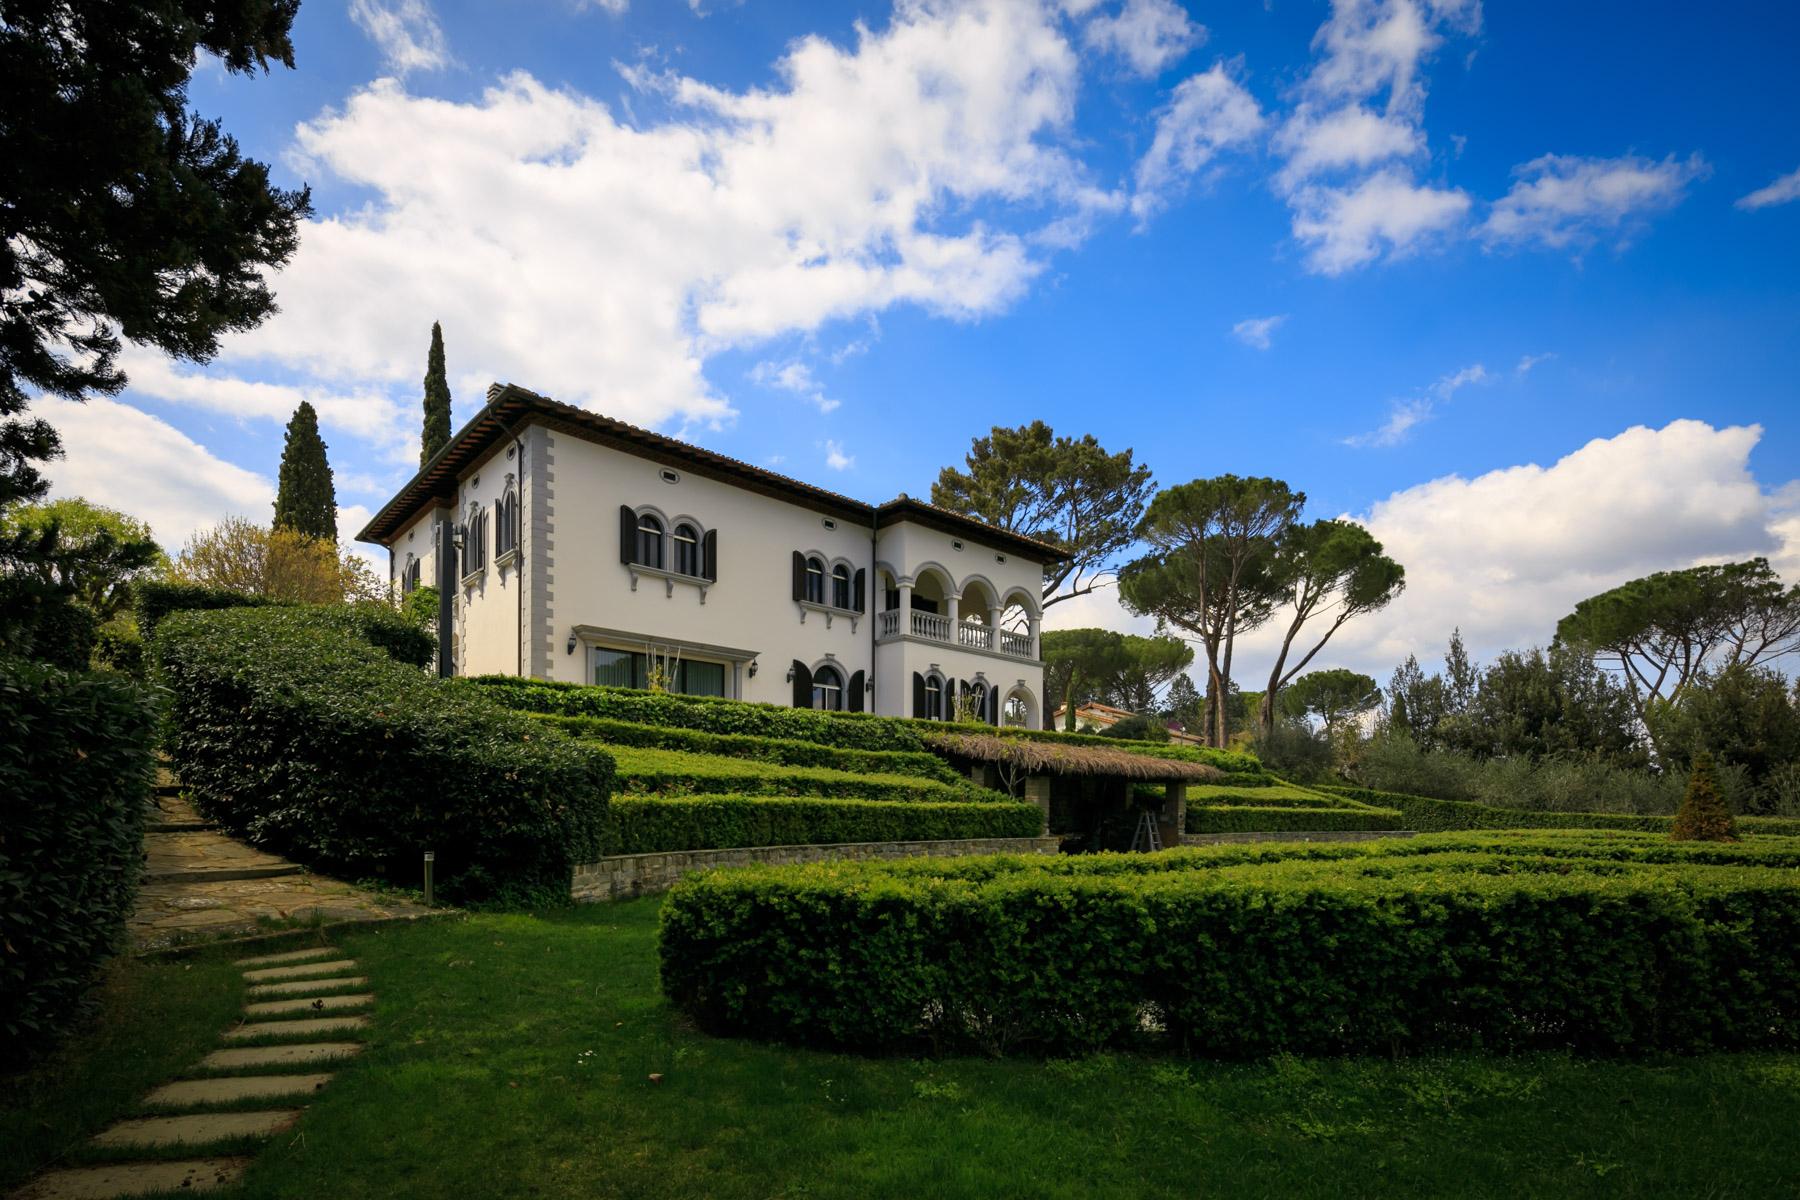 Splendid villa with pool on the Pian dei Giullari hill in Florence - 5